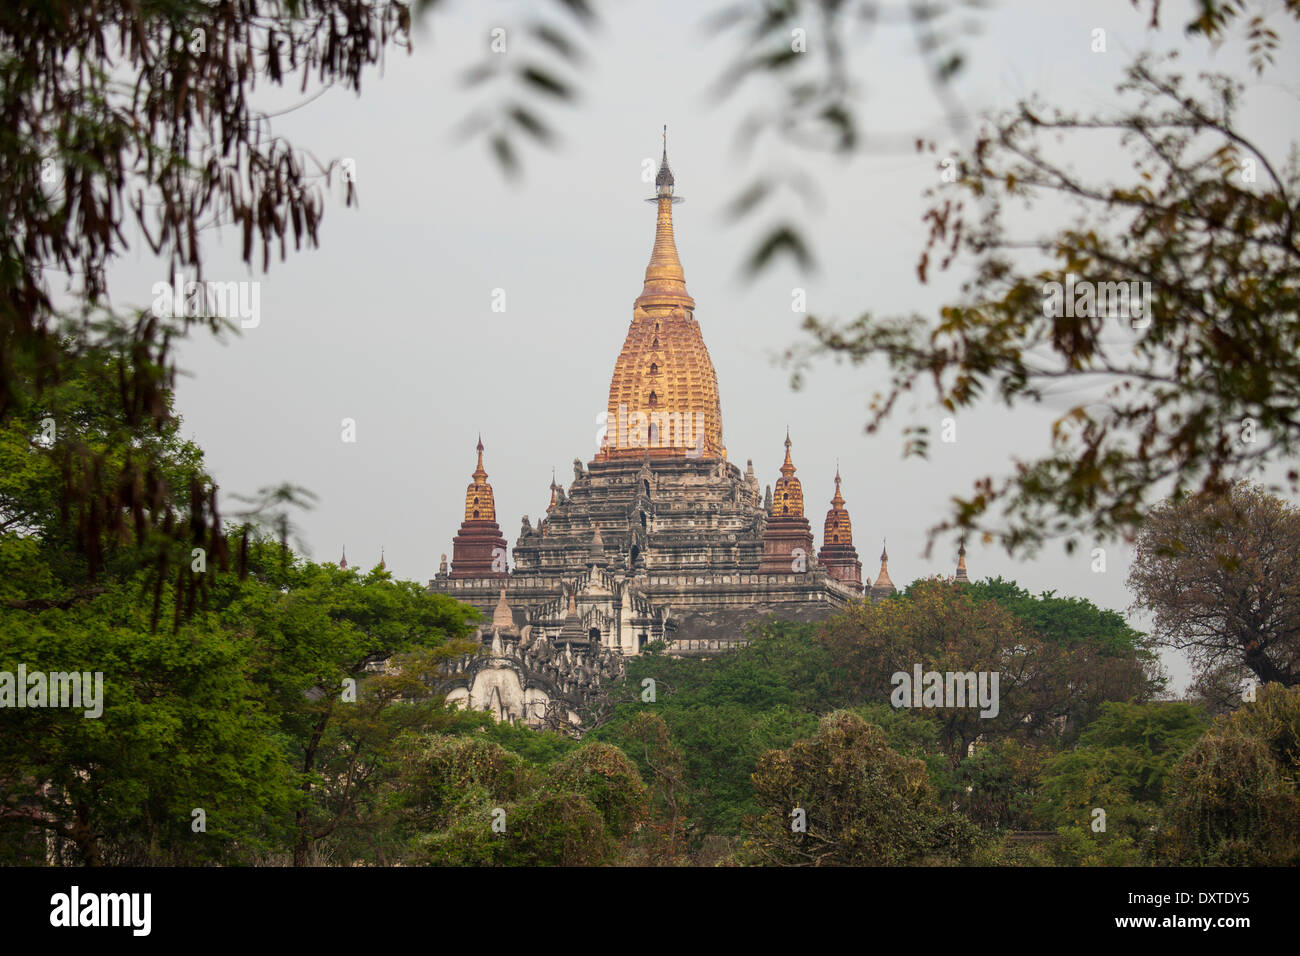 Ananda Pahto Buddhist Temple in Bagan Myanmar Stock Photo